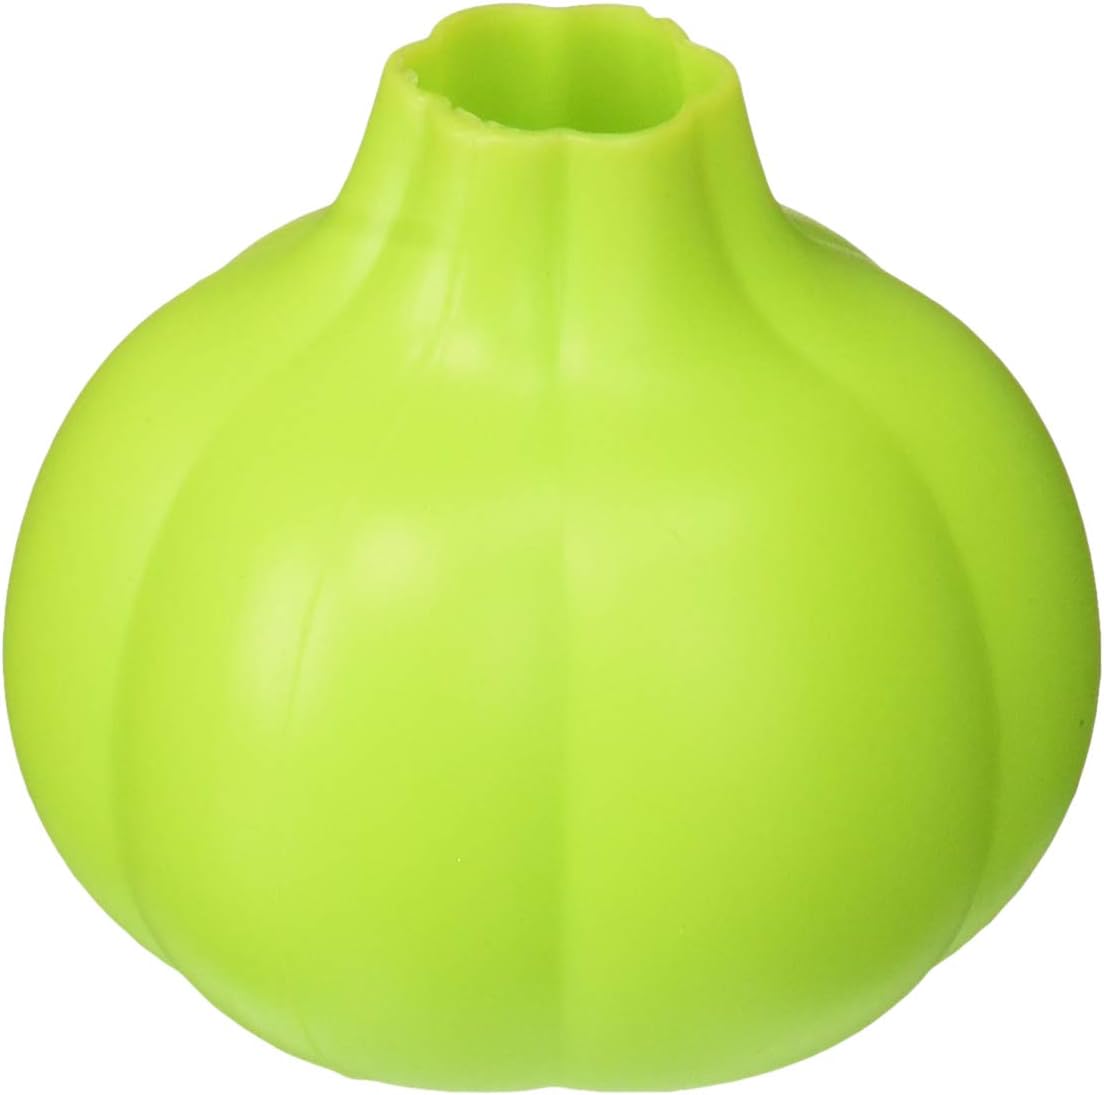 LETOOR Silicone Peeler Garlic Peeling Tools Kitchen Gadget Supplies, 2 inch, Green